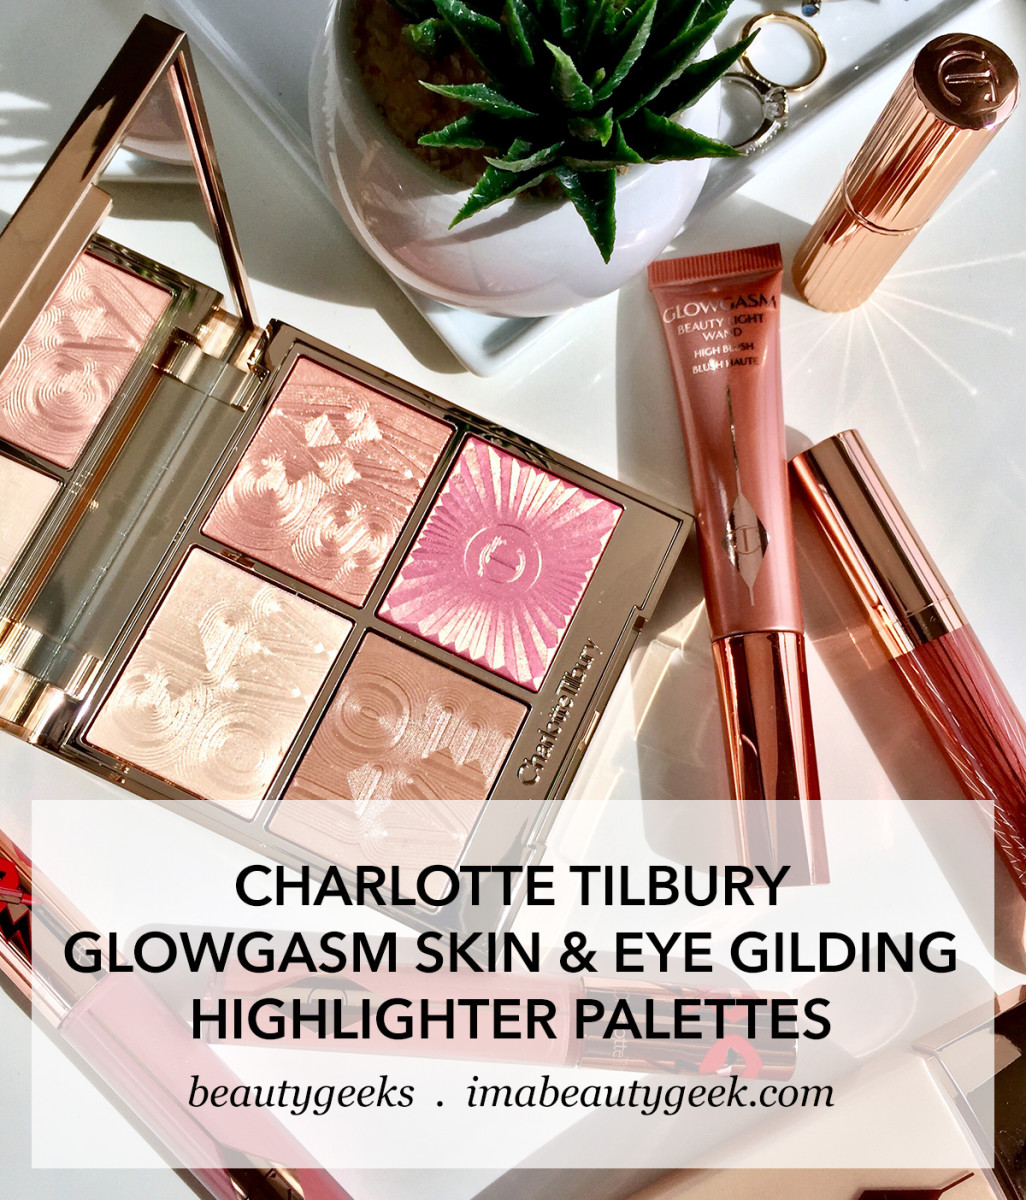 Charlotte Tilbury Glowgasm palettes limited edition 2019